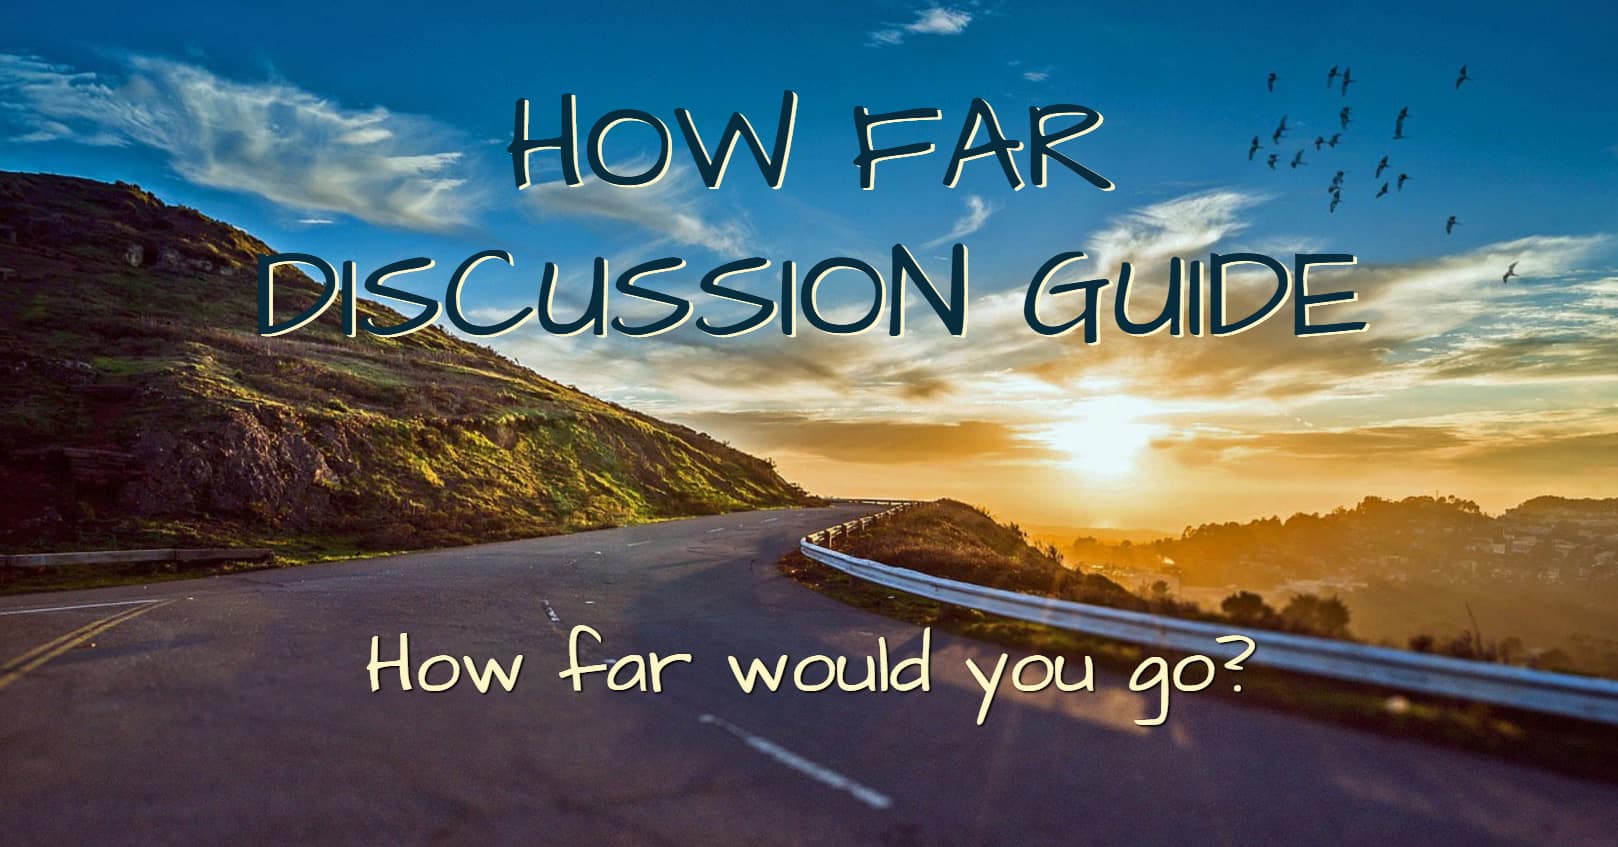 How Far Discussion Guide by Teyla Rachel Branton